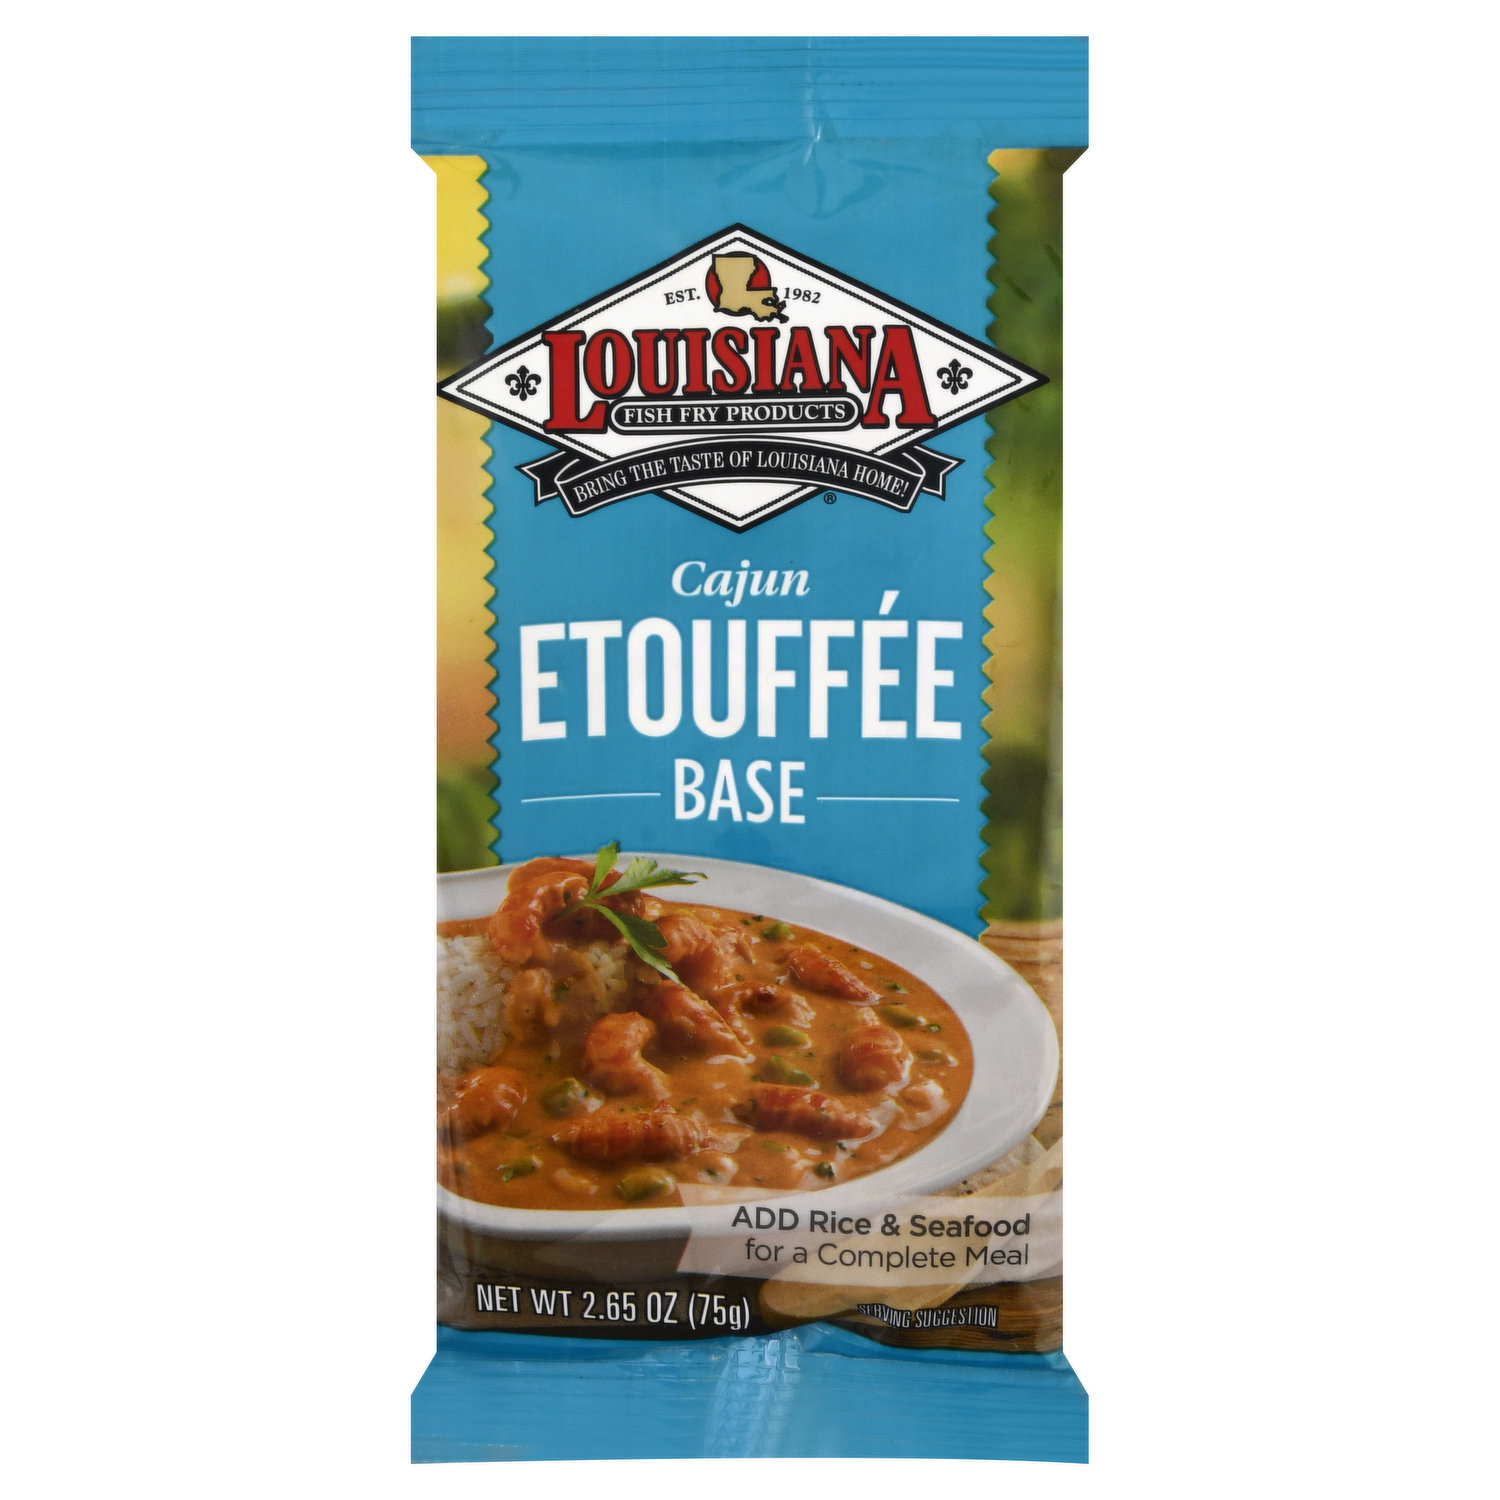 Louisiana Fish Fry Products Dirty Rice Mix